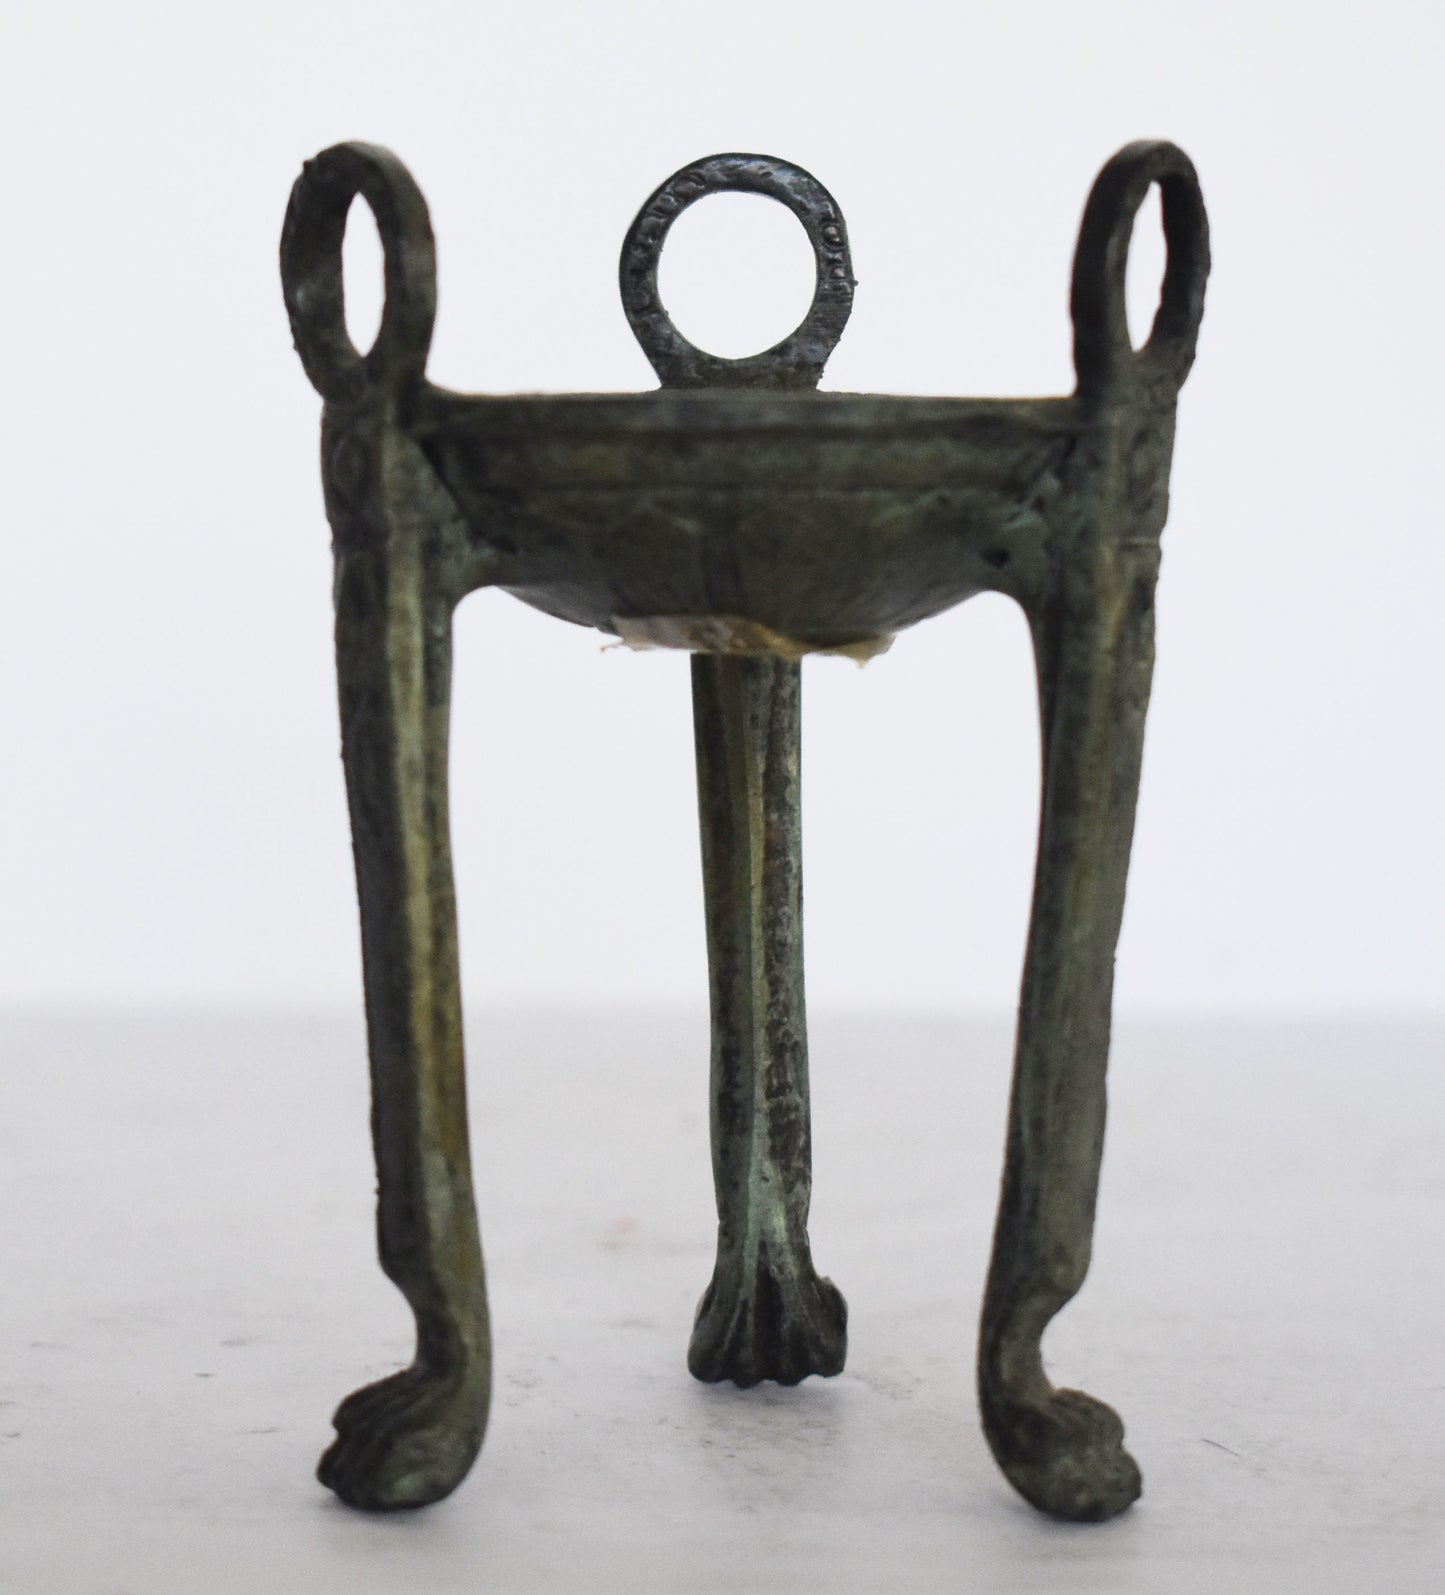 Ancient Greek Tripod - Delphi Winner Prize - Small - Pure Bronze Artifact